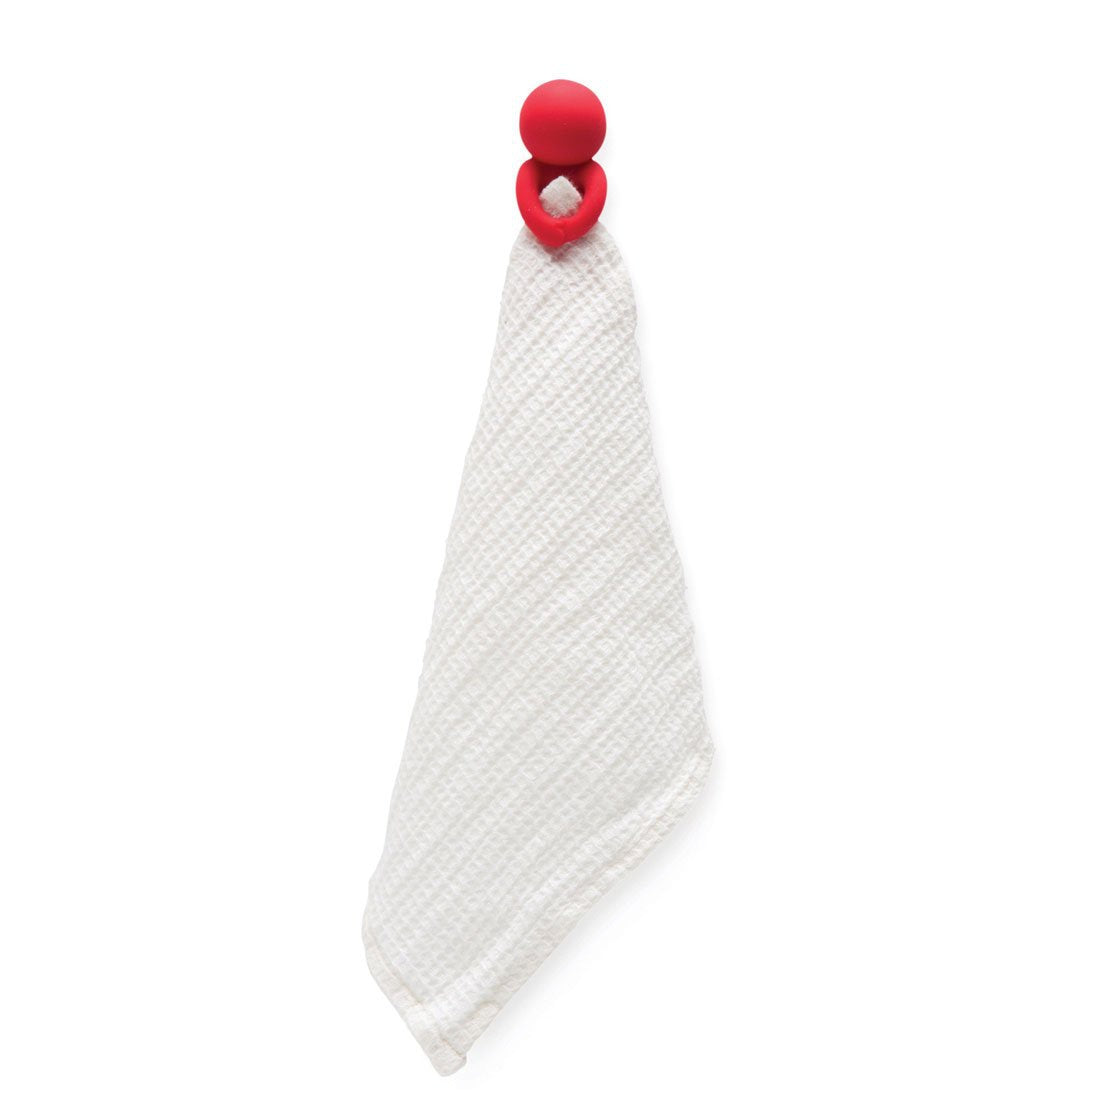 Modesto Towel Holder holding a white towel.